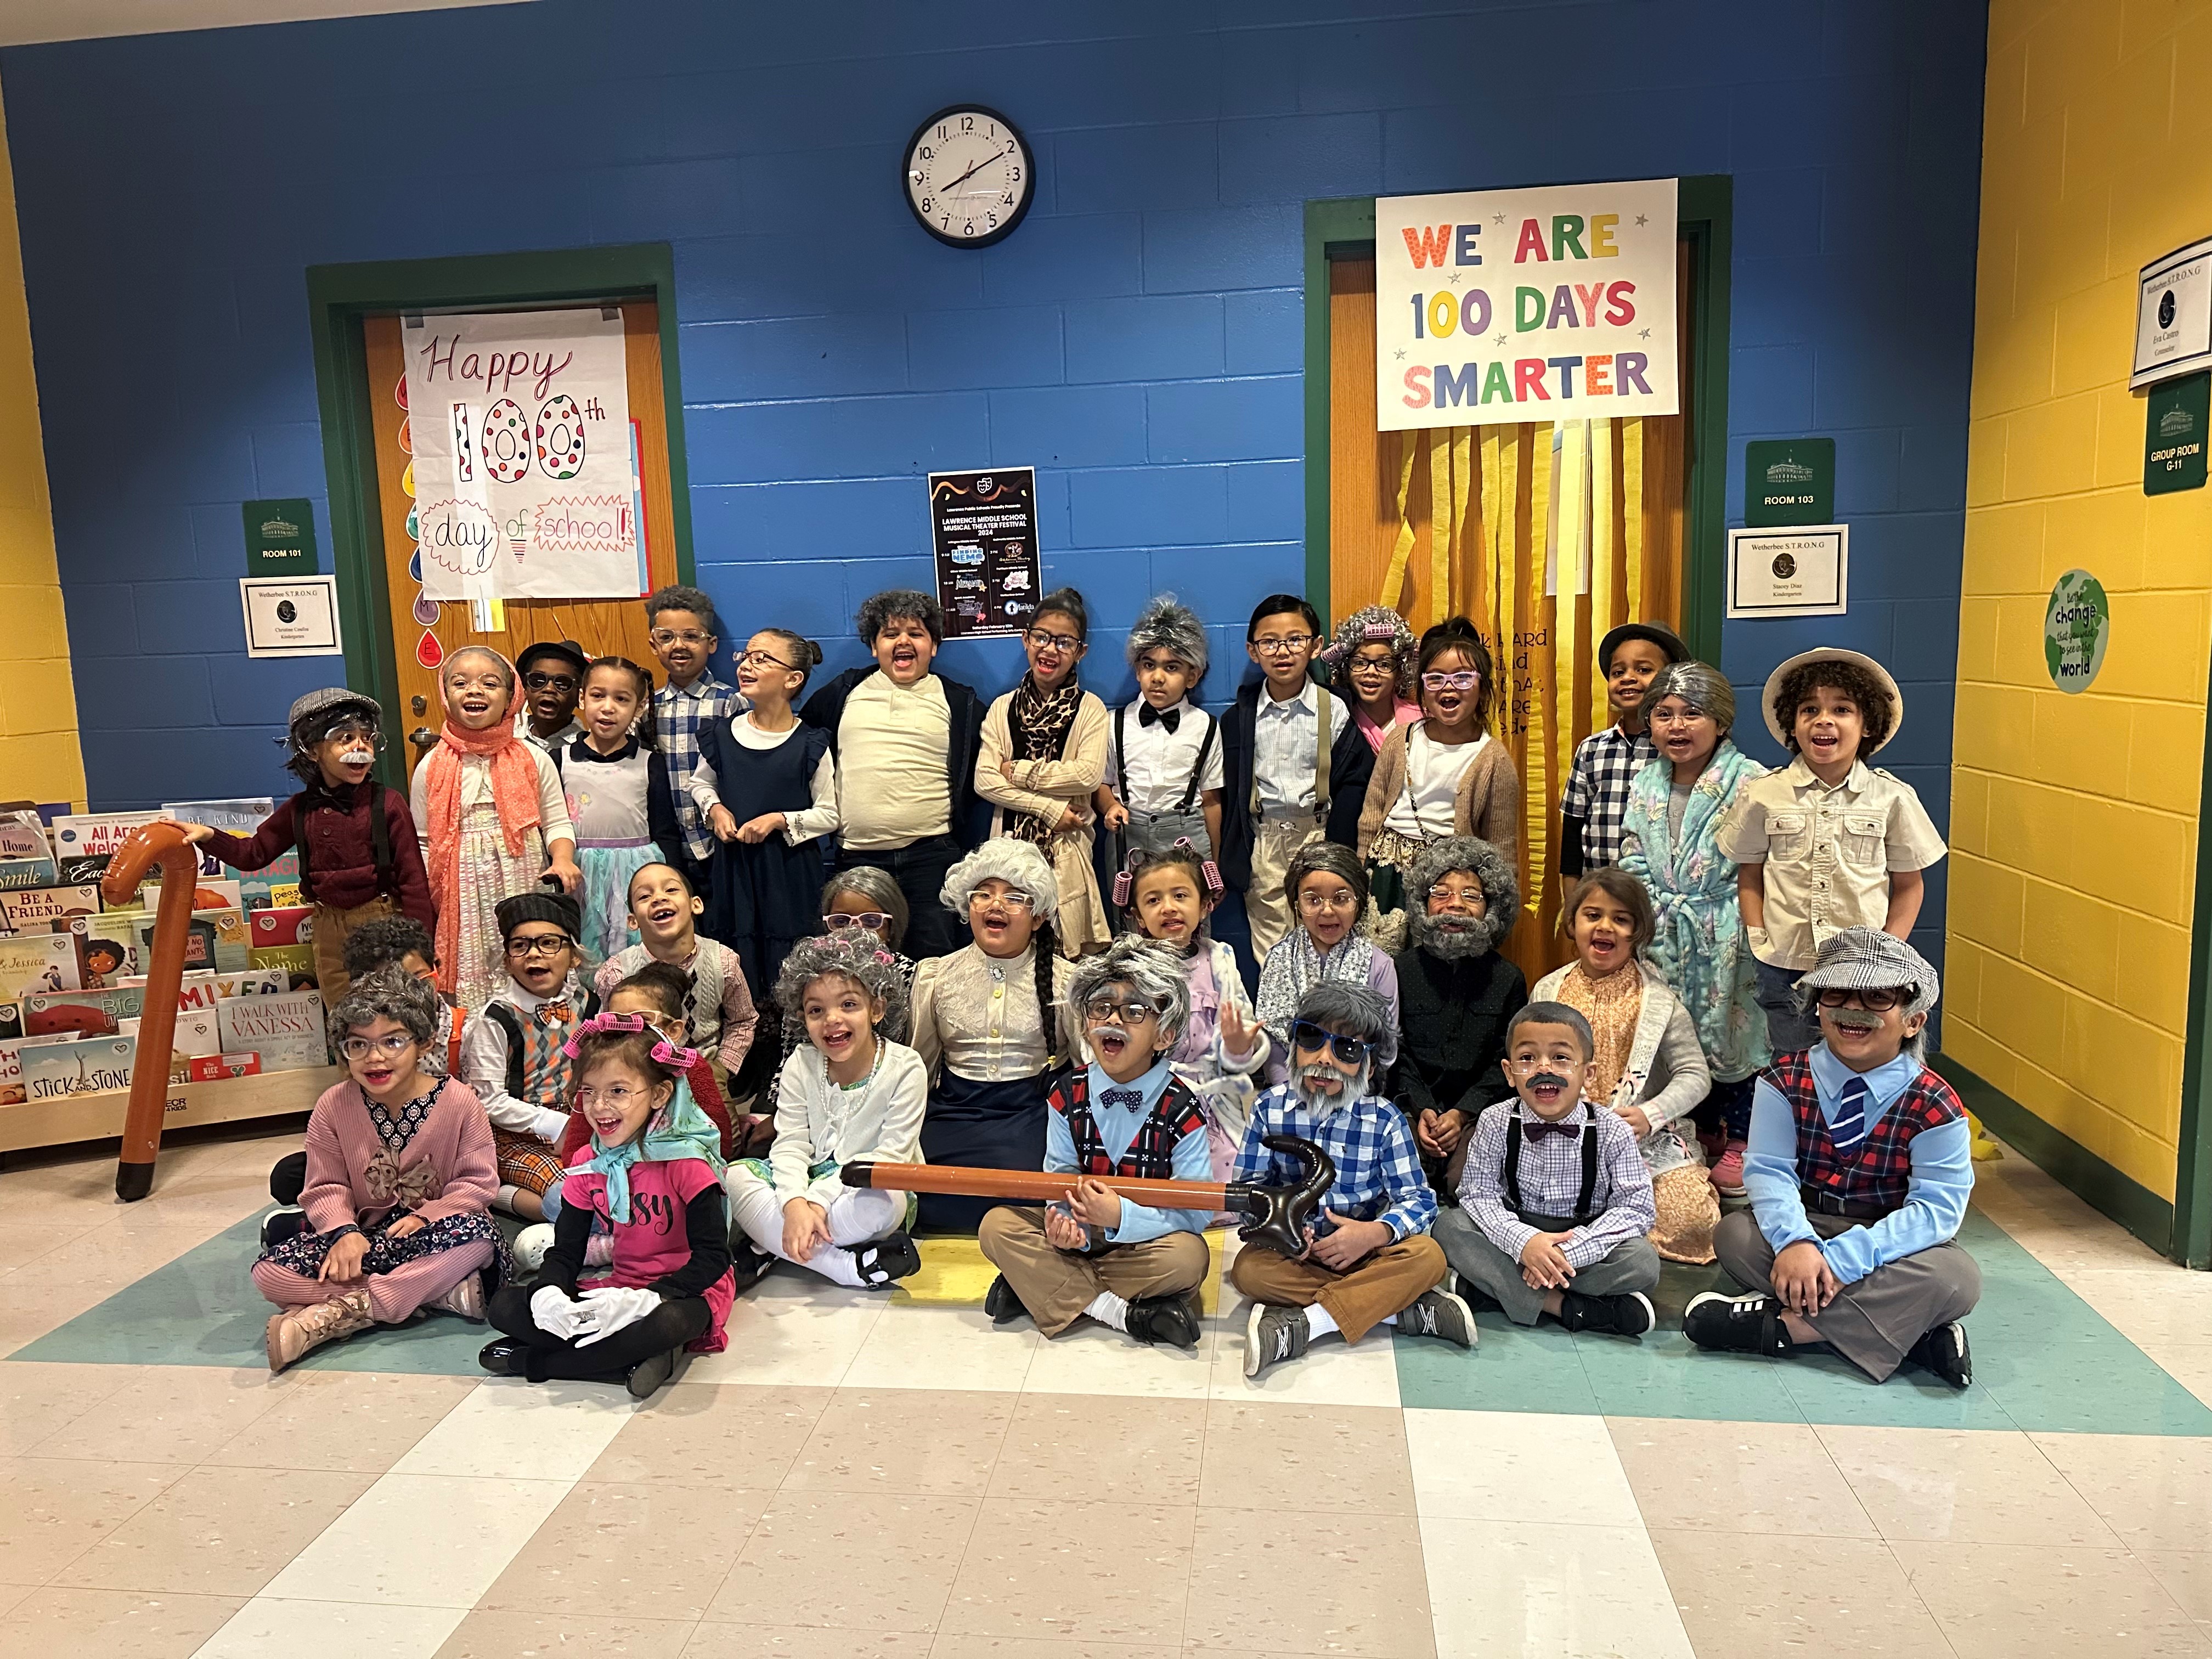 group of kindergarten children dress up as elderly folk